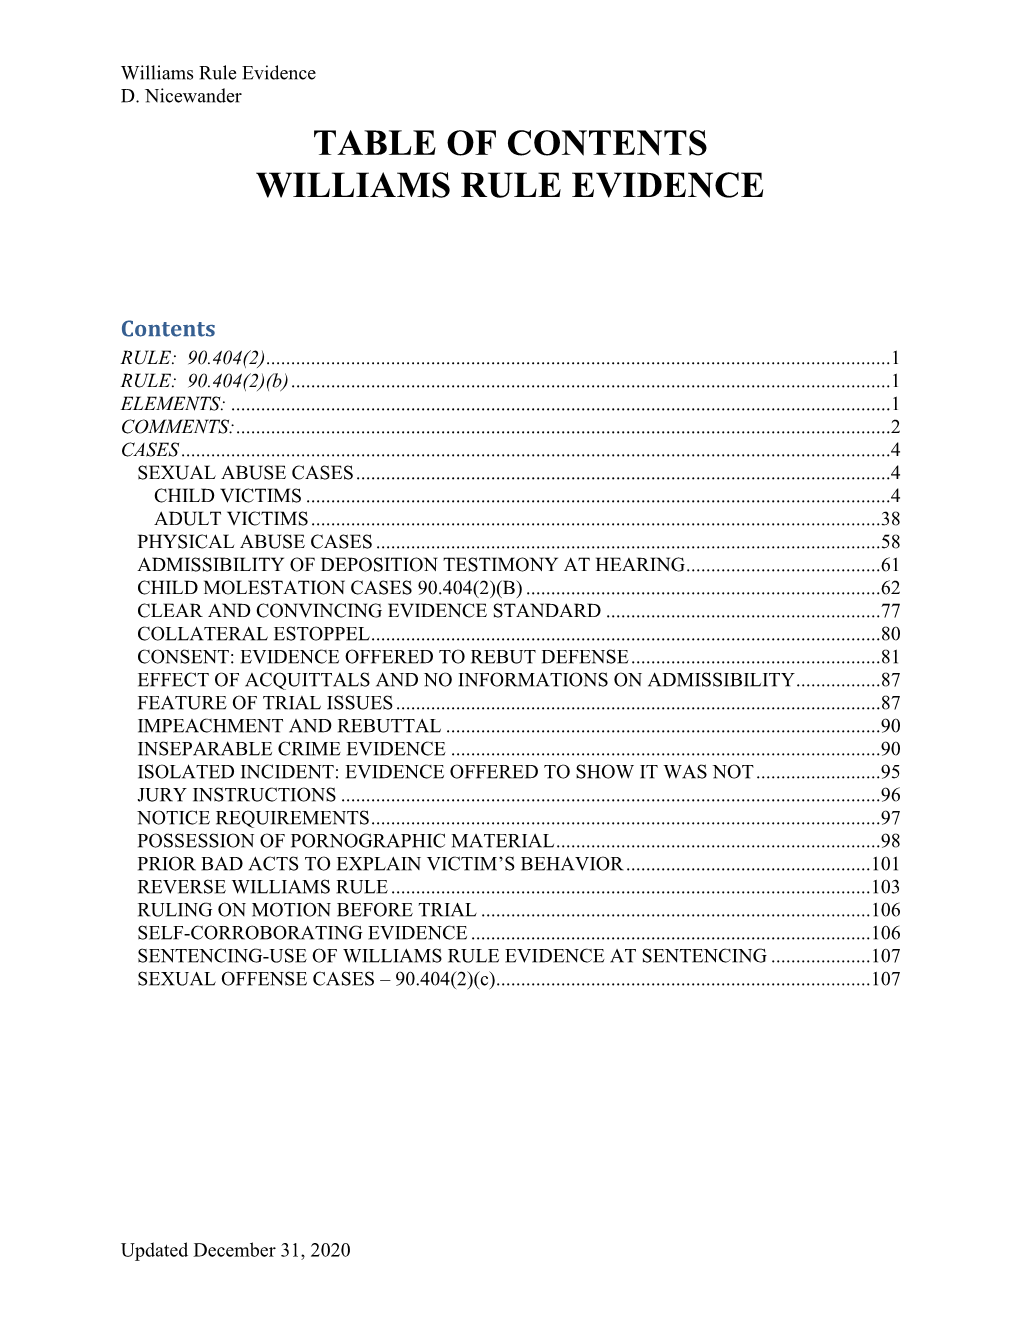 Williams Rule Evidence D